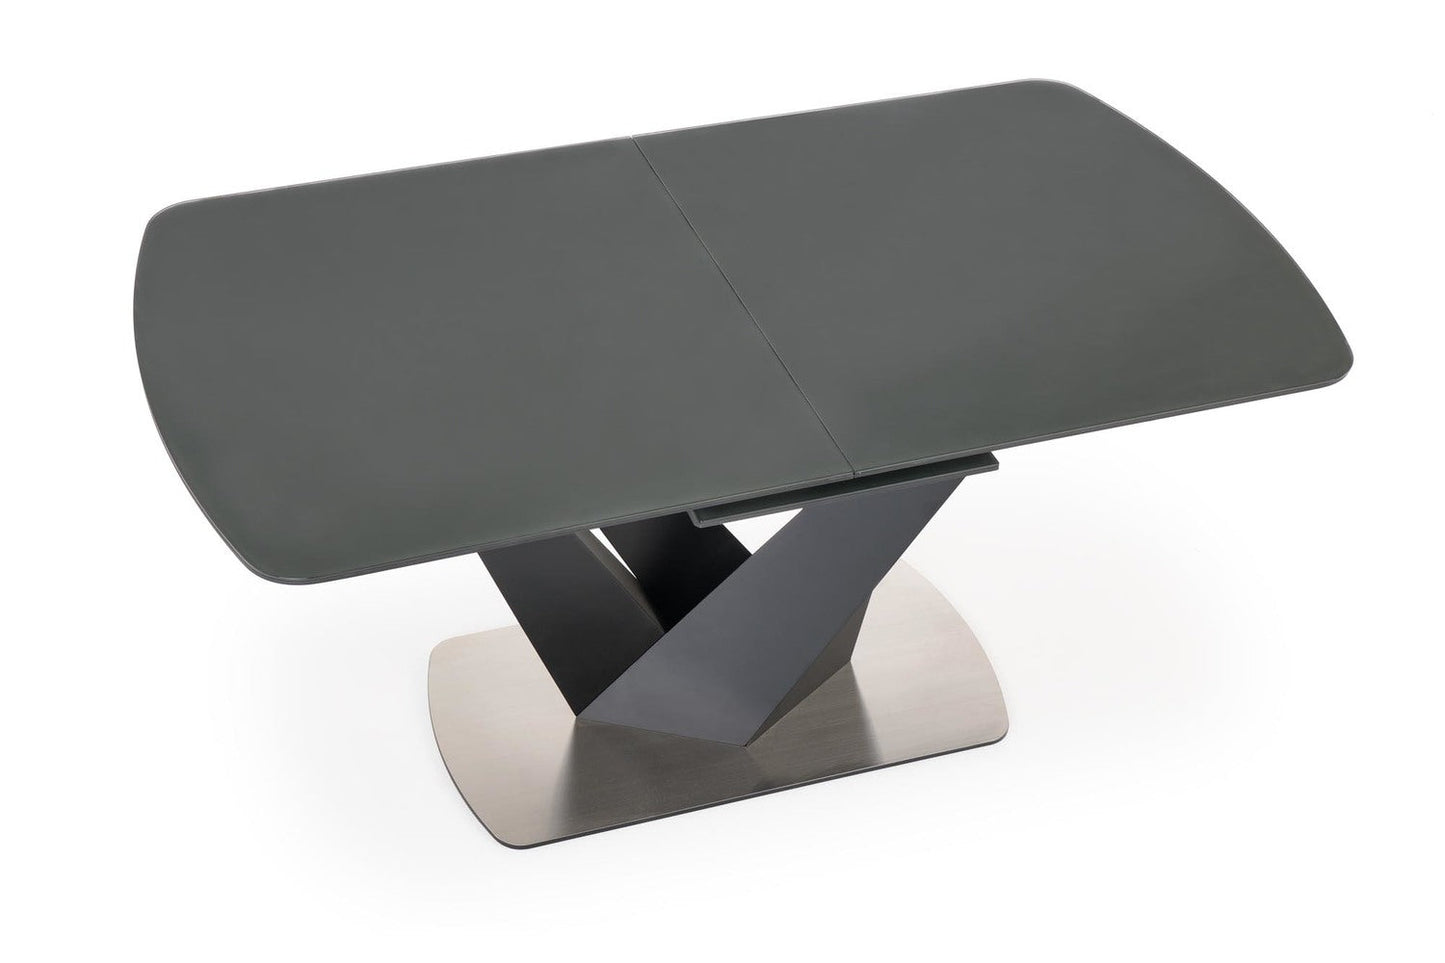 PT palīdzama galda augsme - tumši osni, kāja - melna 160-200/90/77 cm